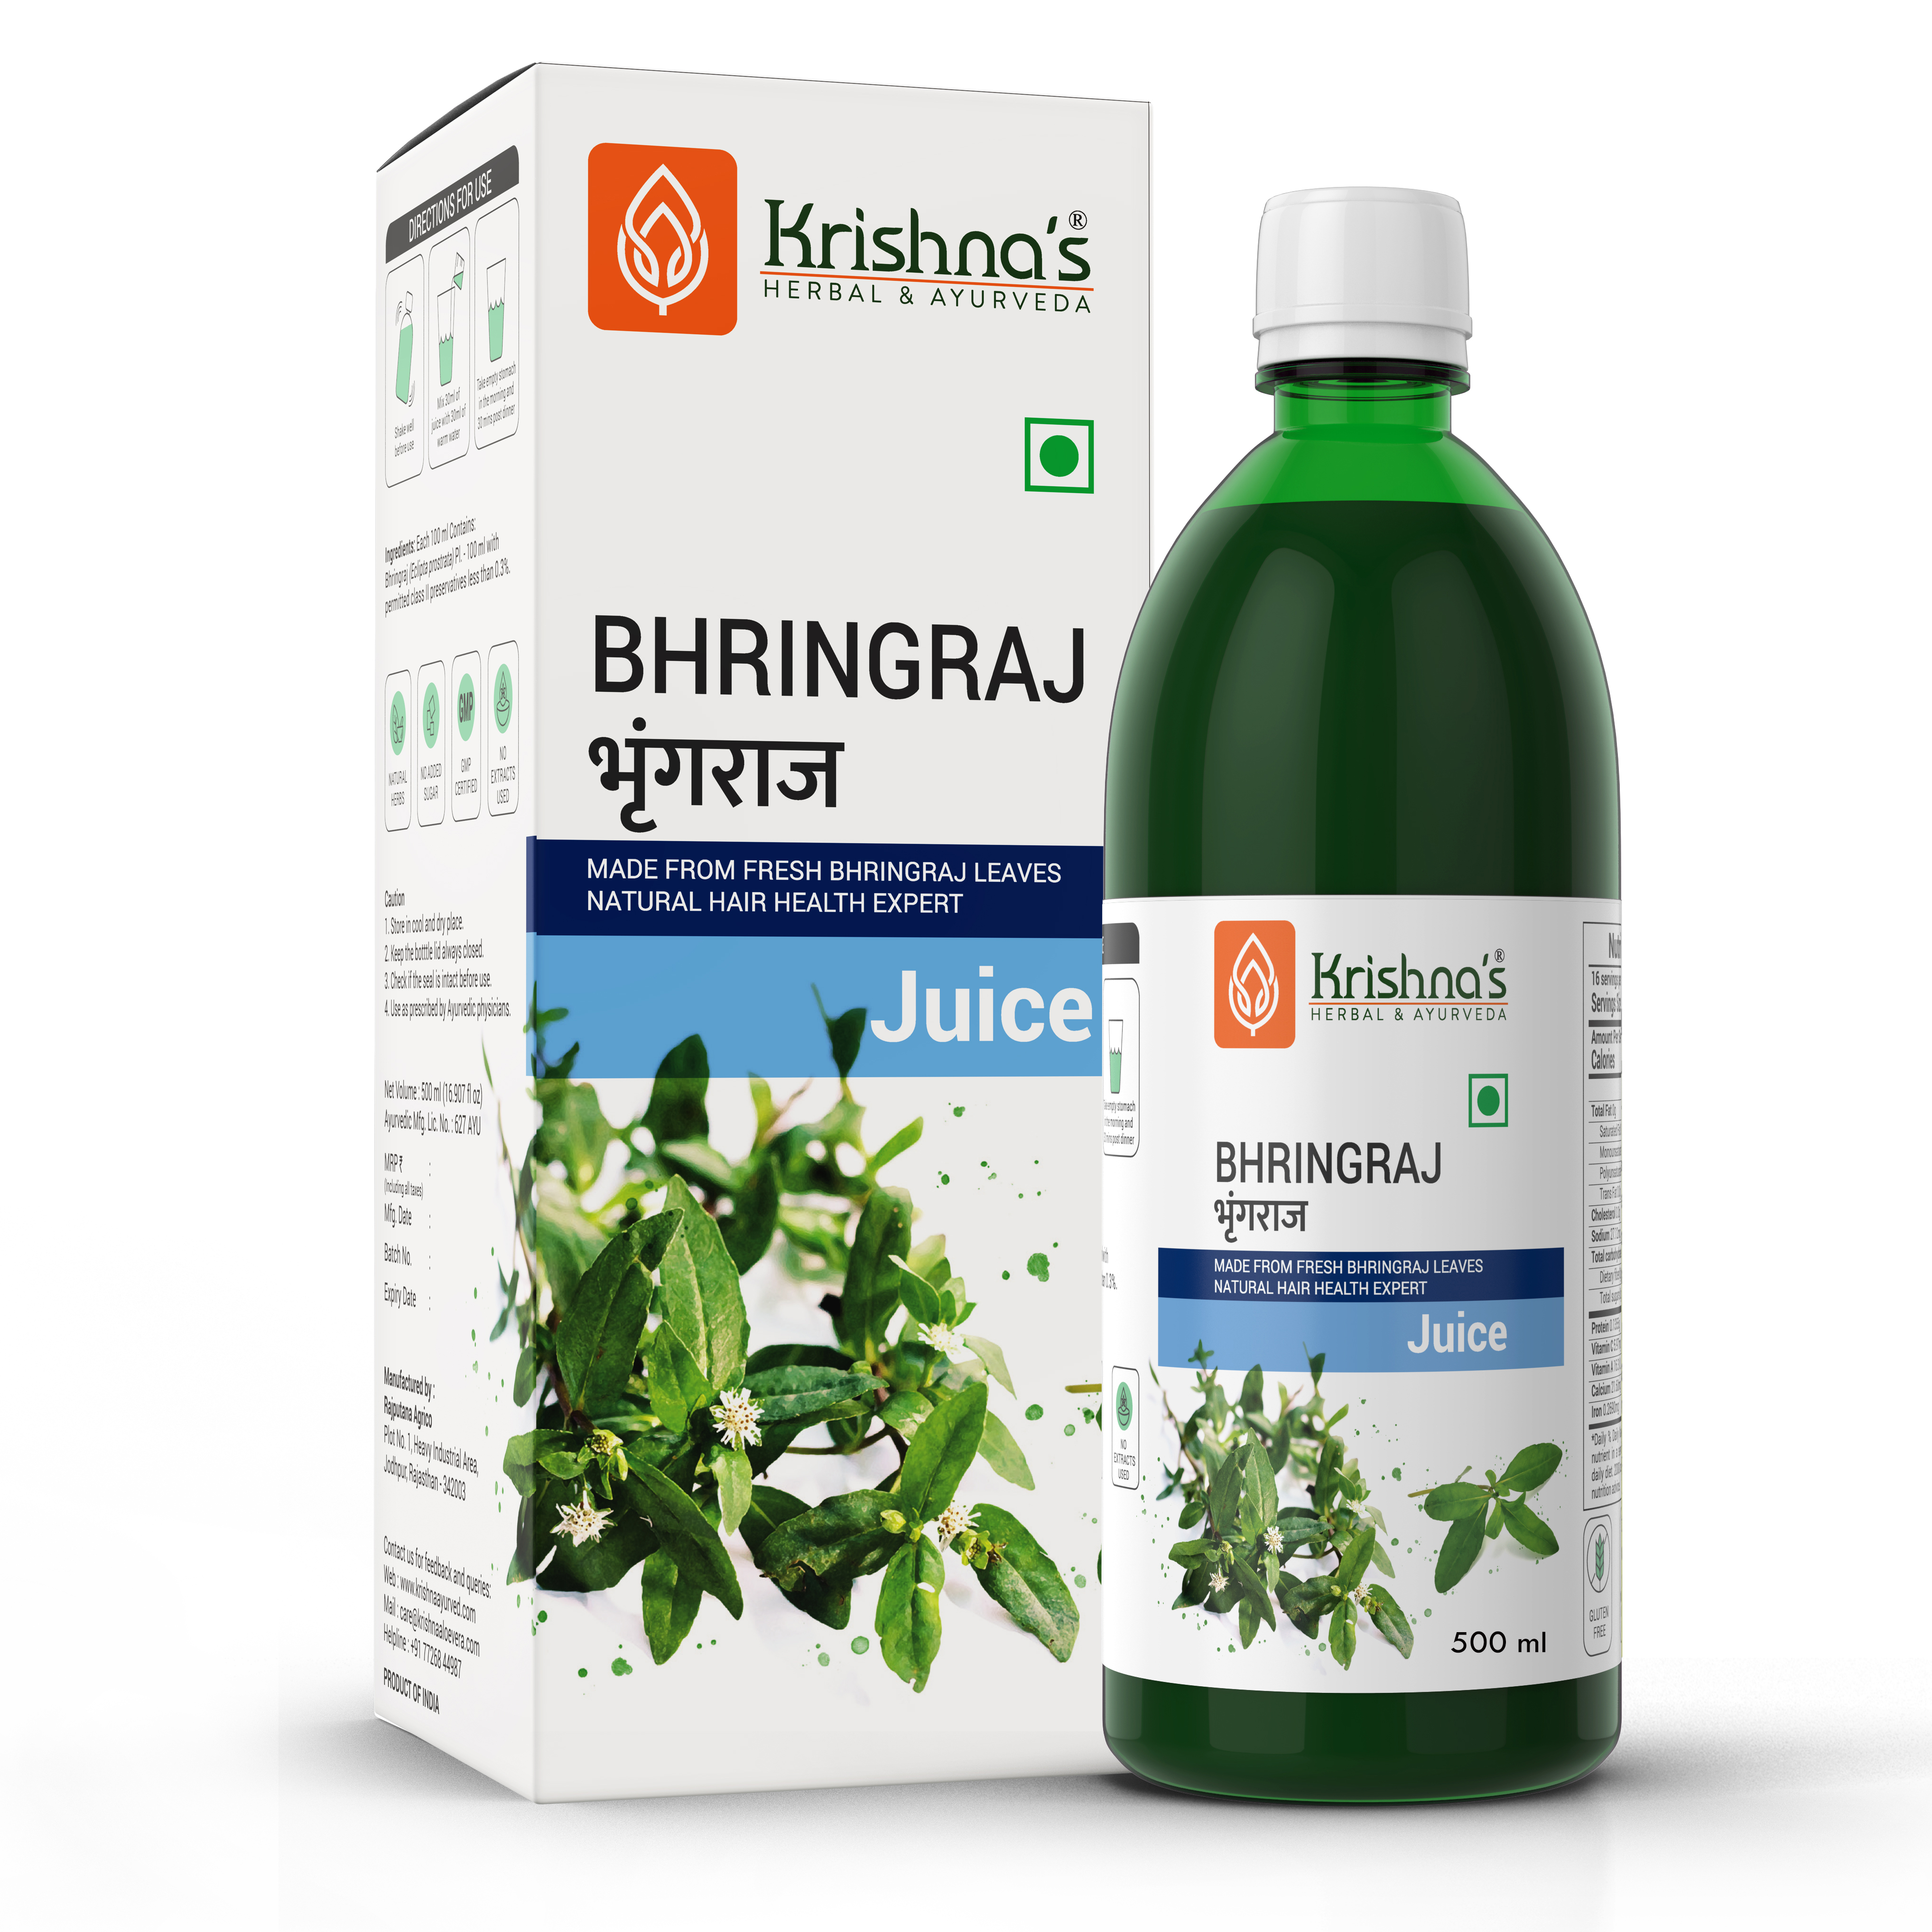 Buy krishna Herbal Bhringraj Juice at Best Price Online